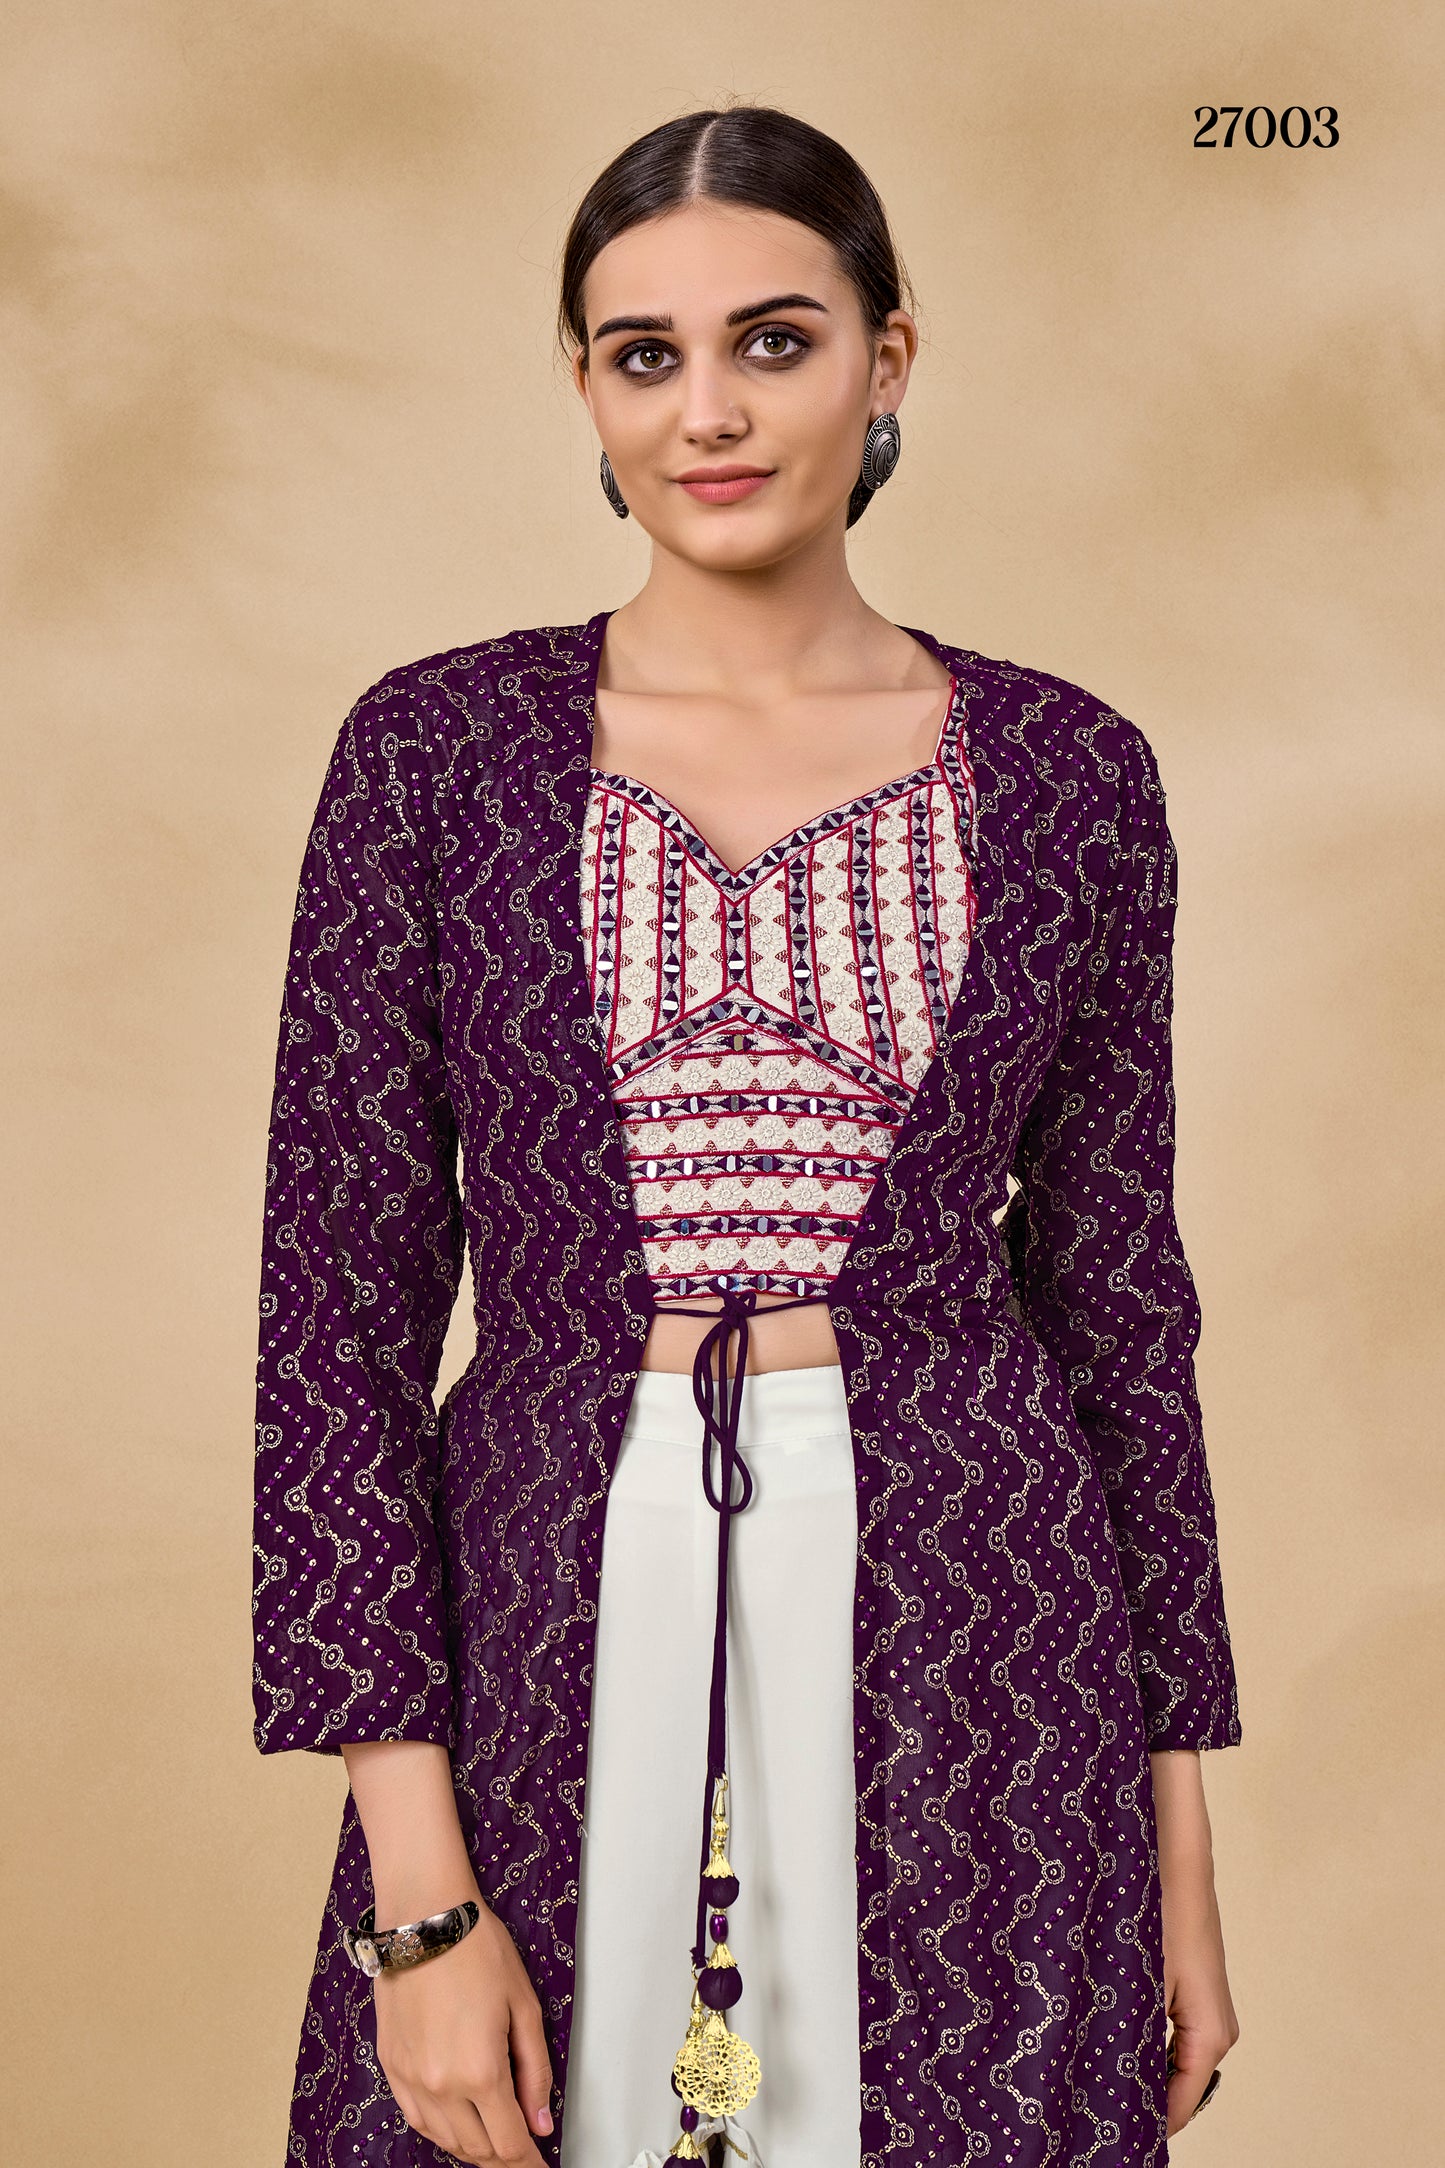 Stunning Purple Color Salwar Suit Buy Now